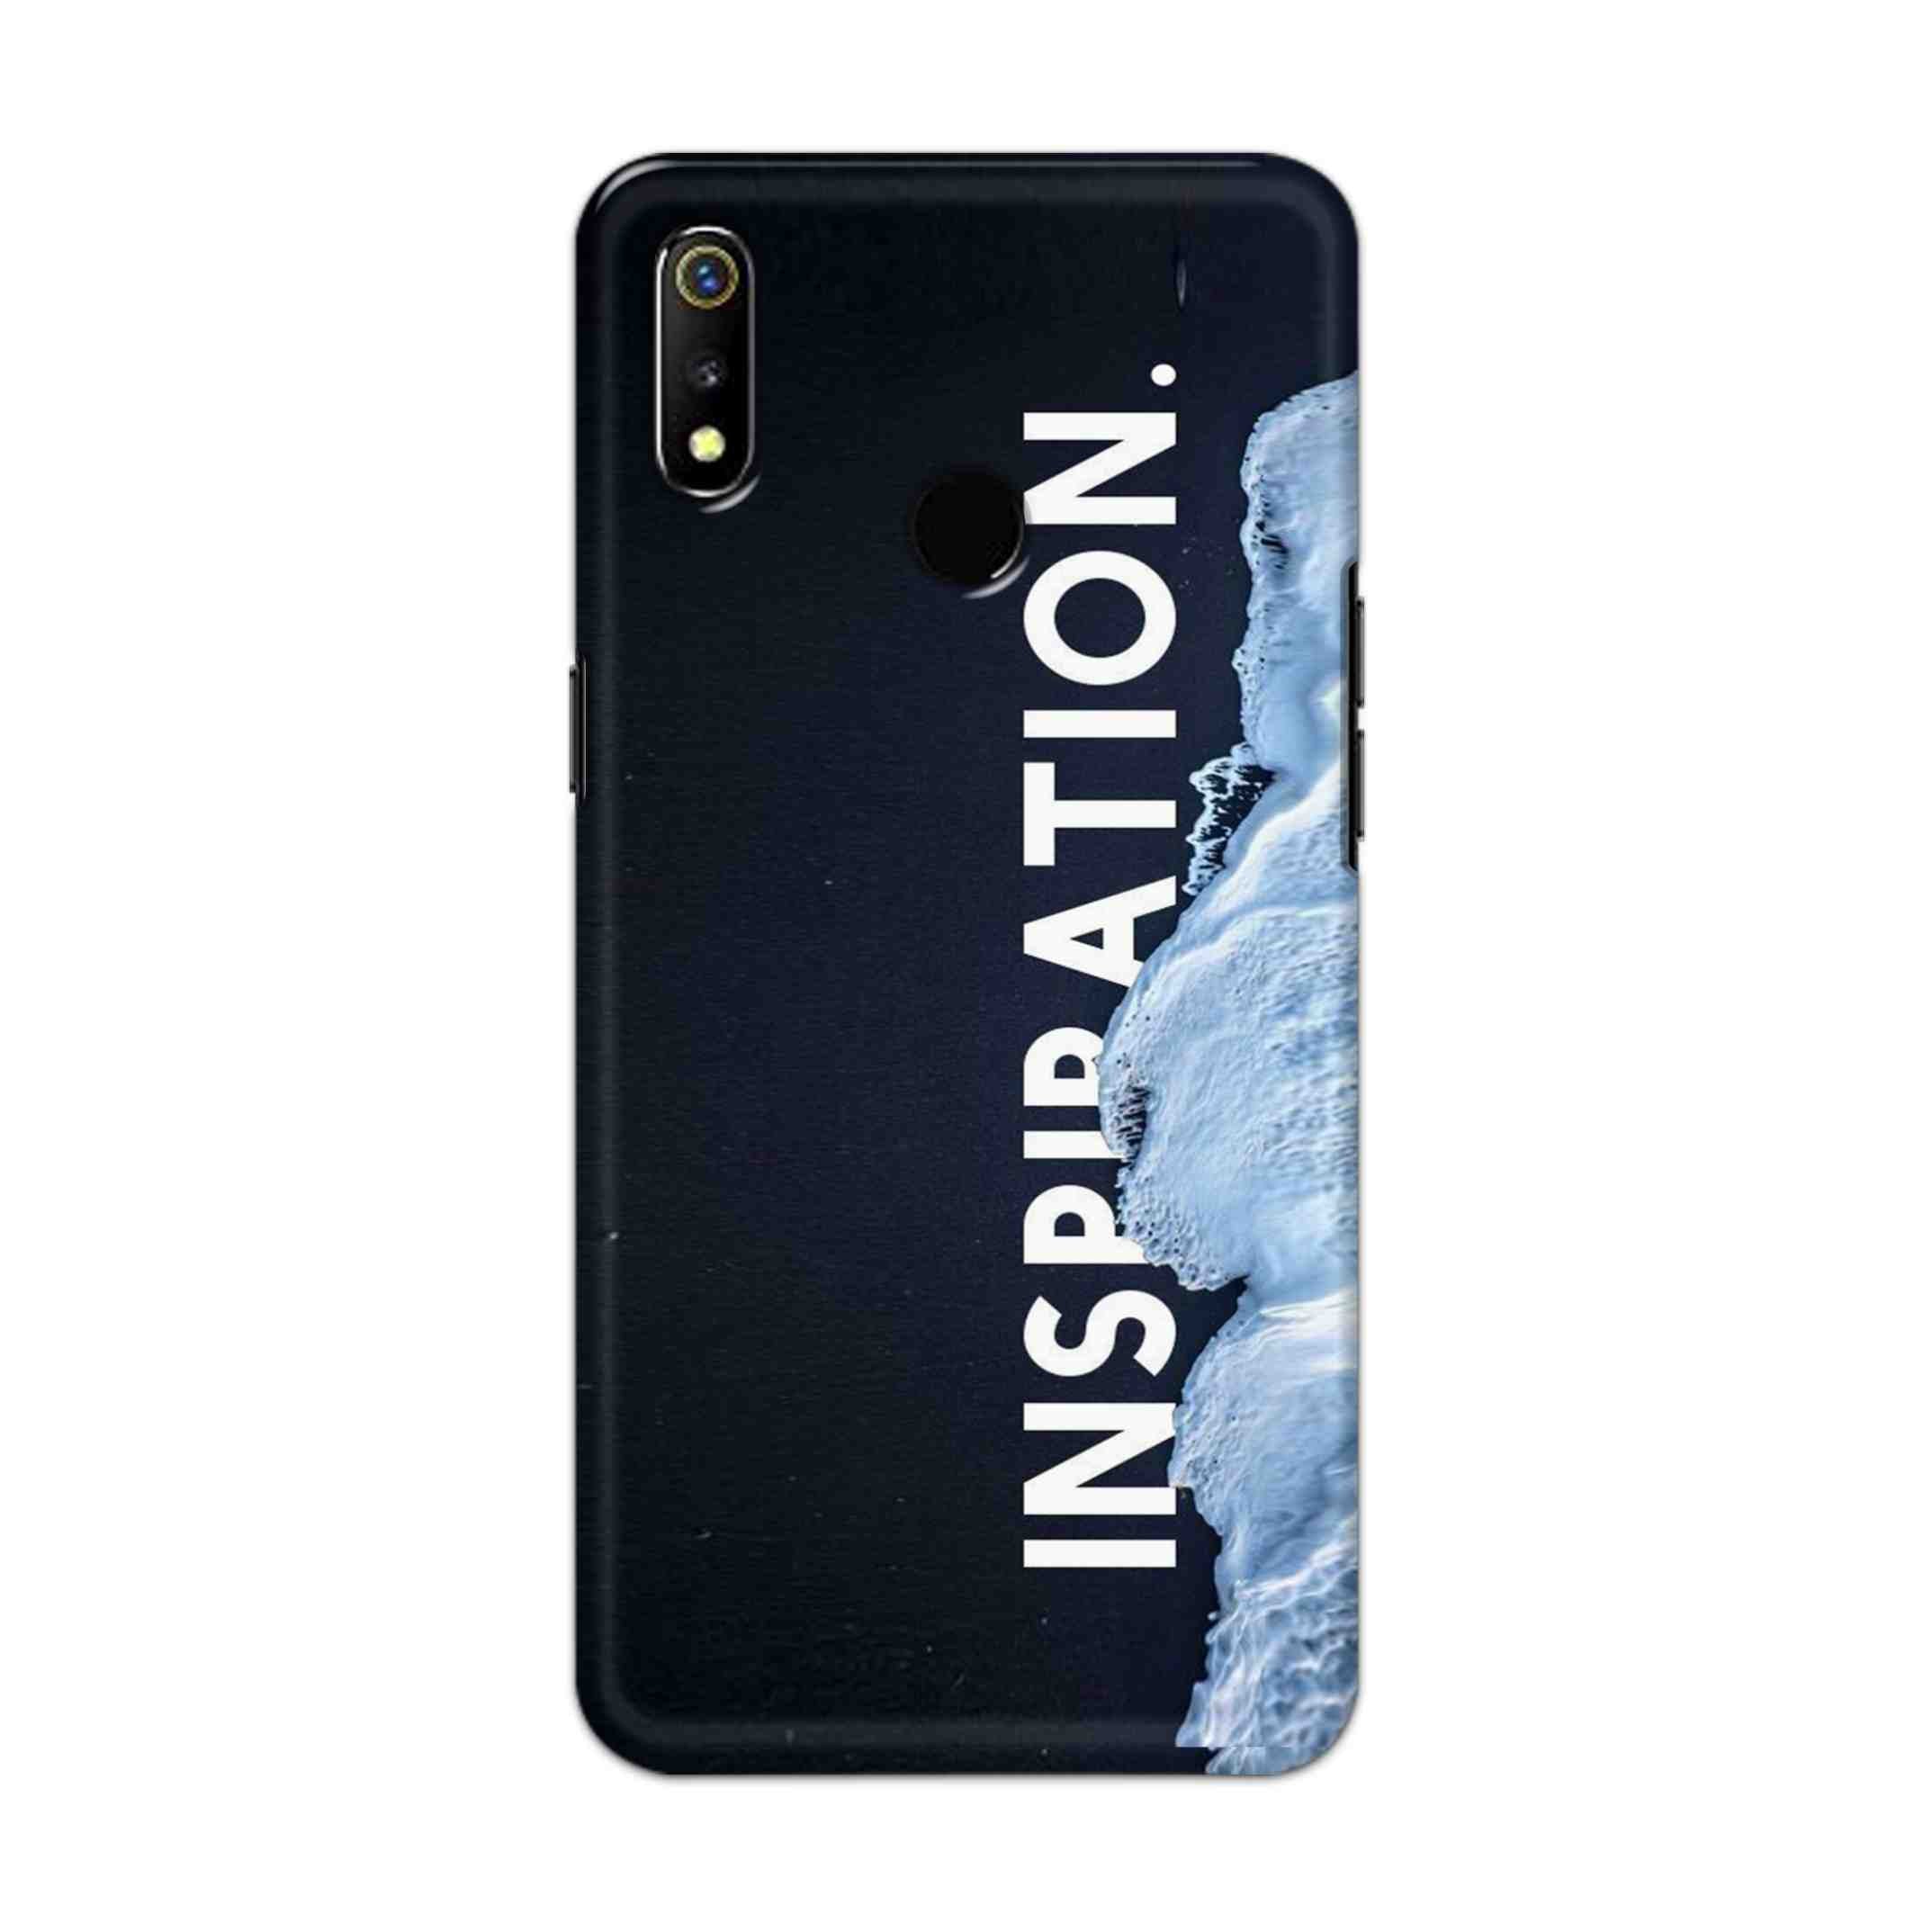 Buy Inspiration Hard Back Mobile Phone Case Cover For Oppo Realme 3 Online